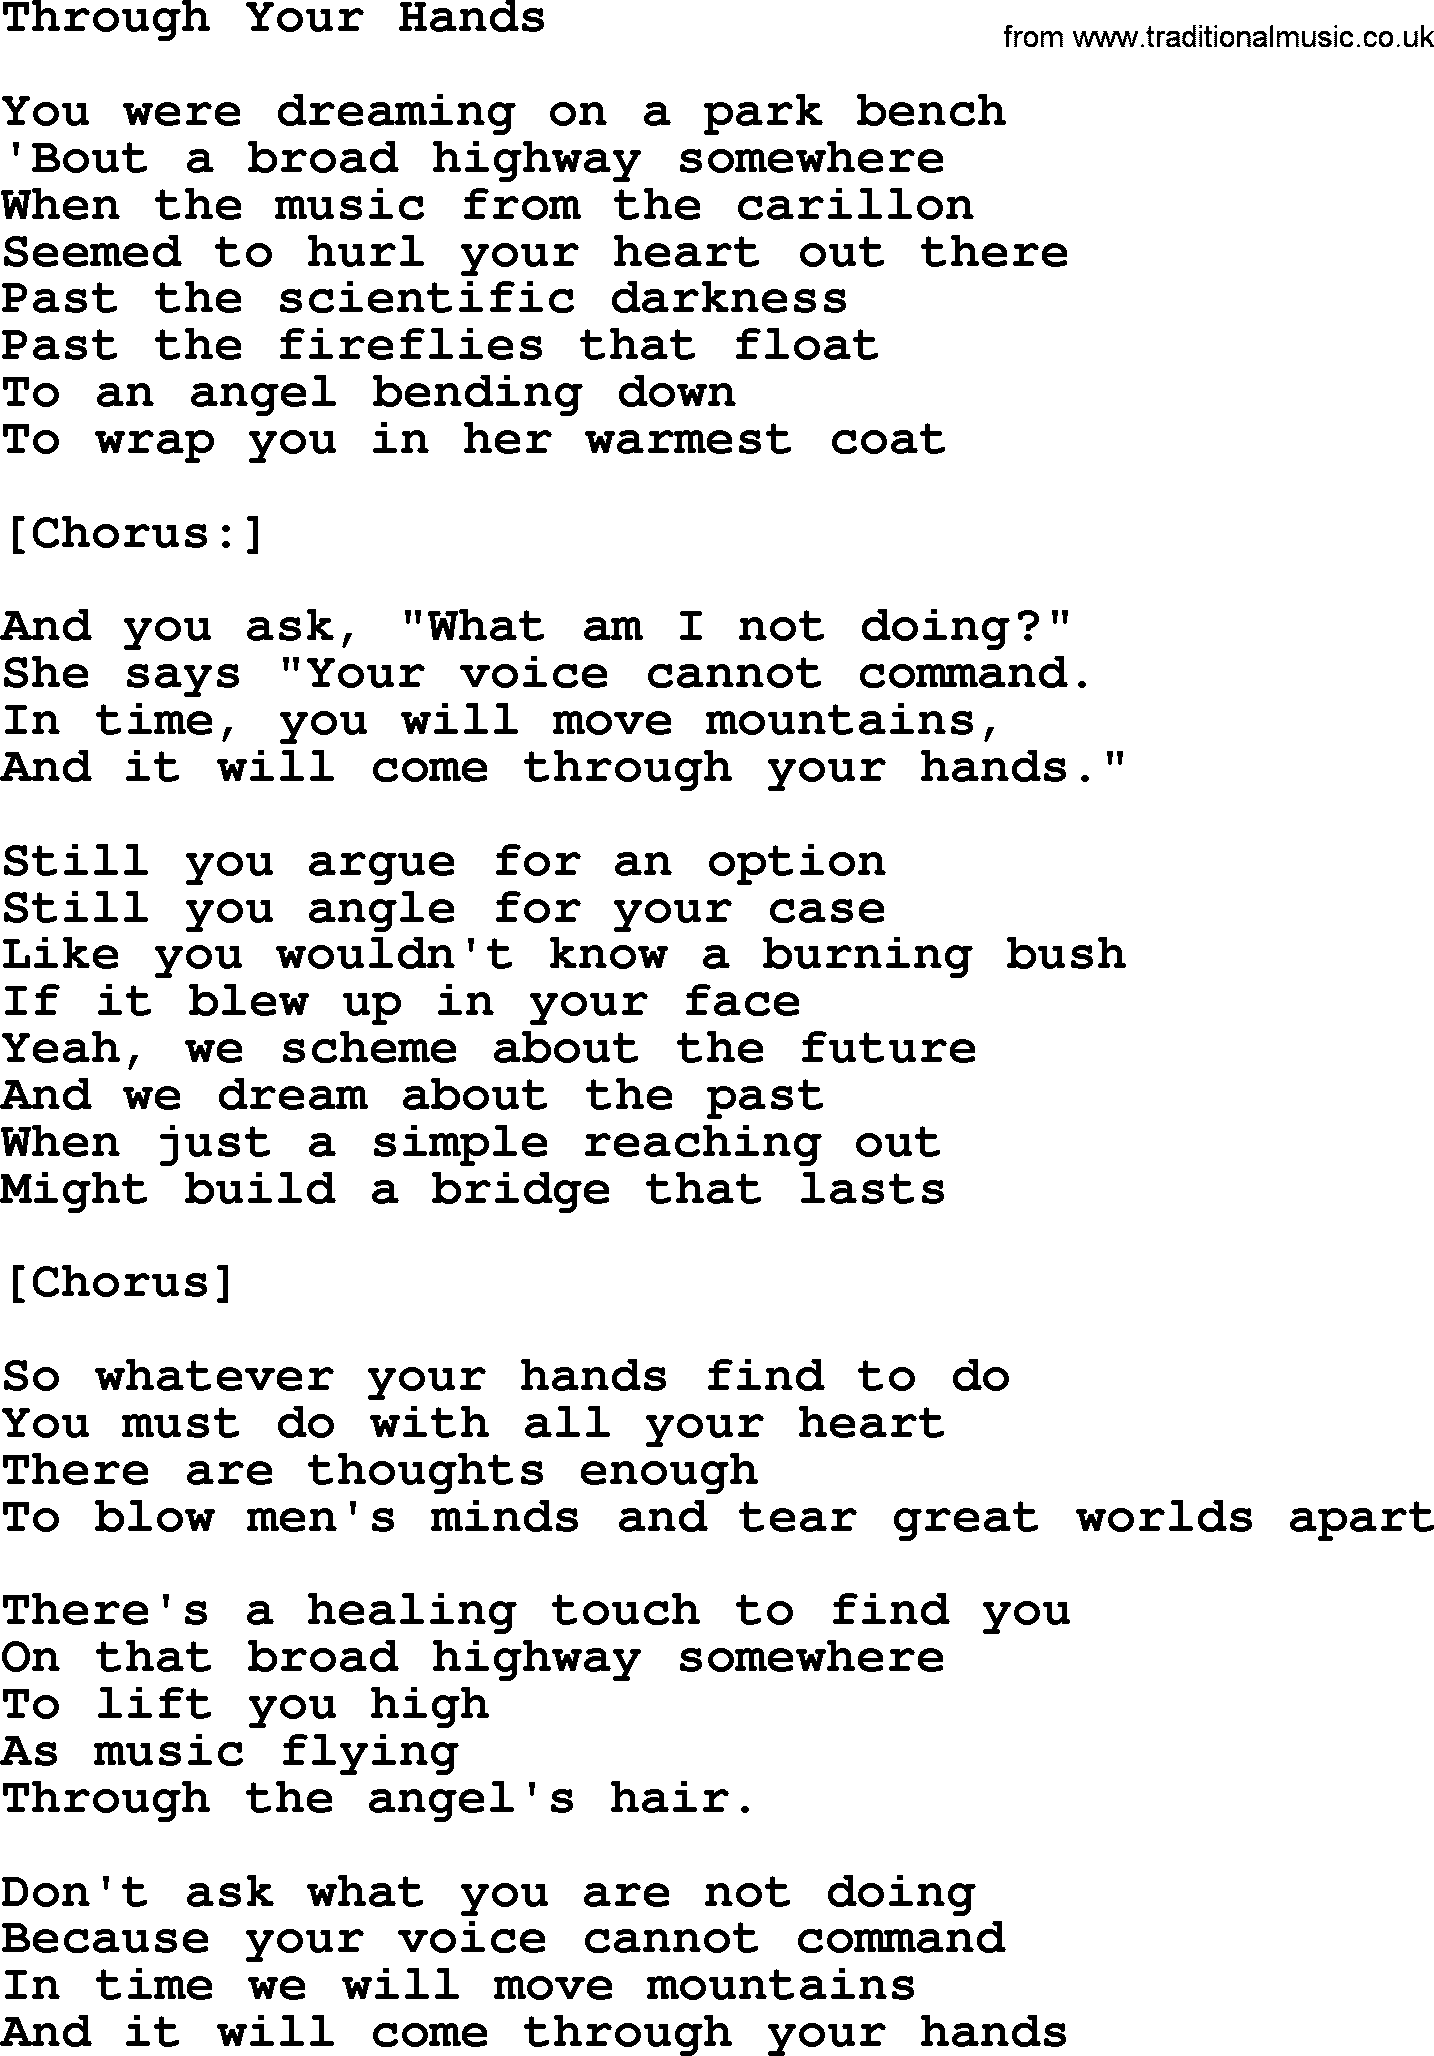 Joan Baez song Through Your Hands, lyrics